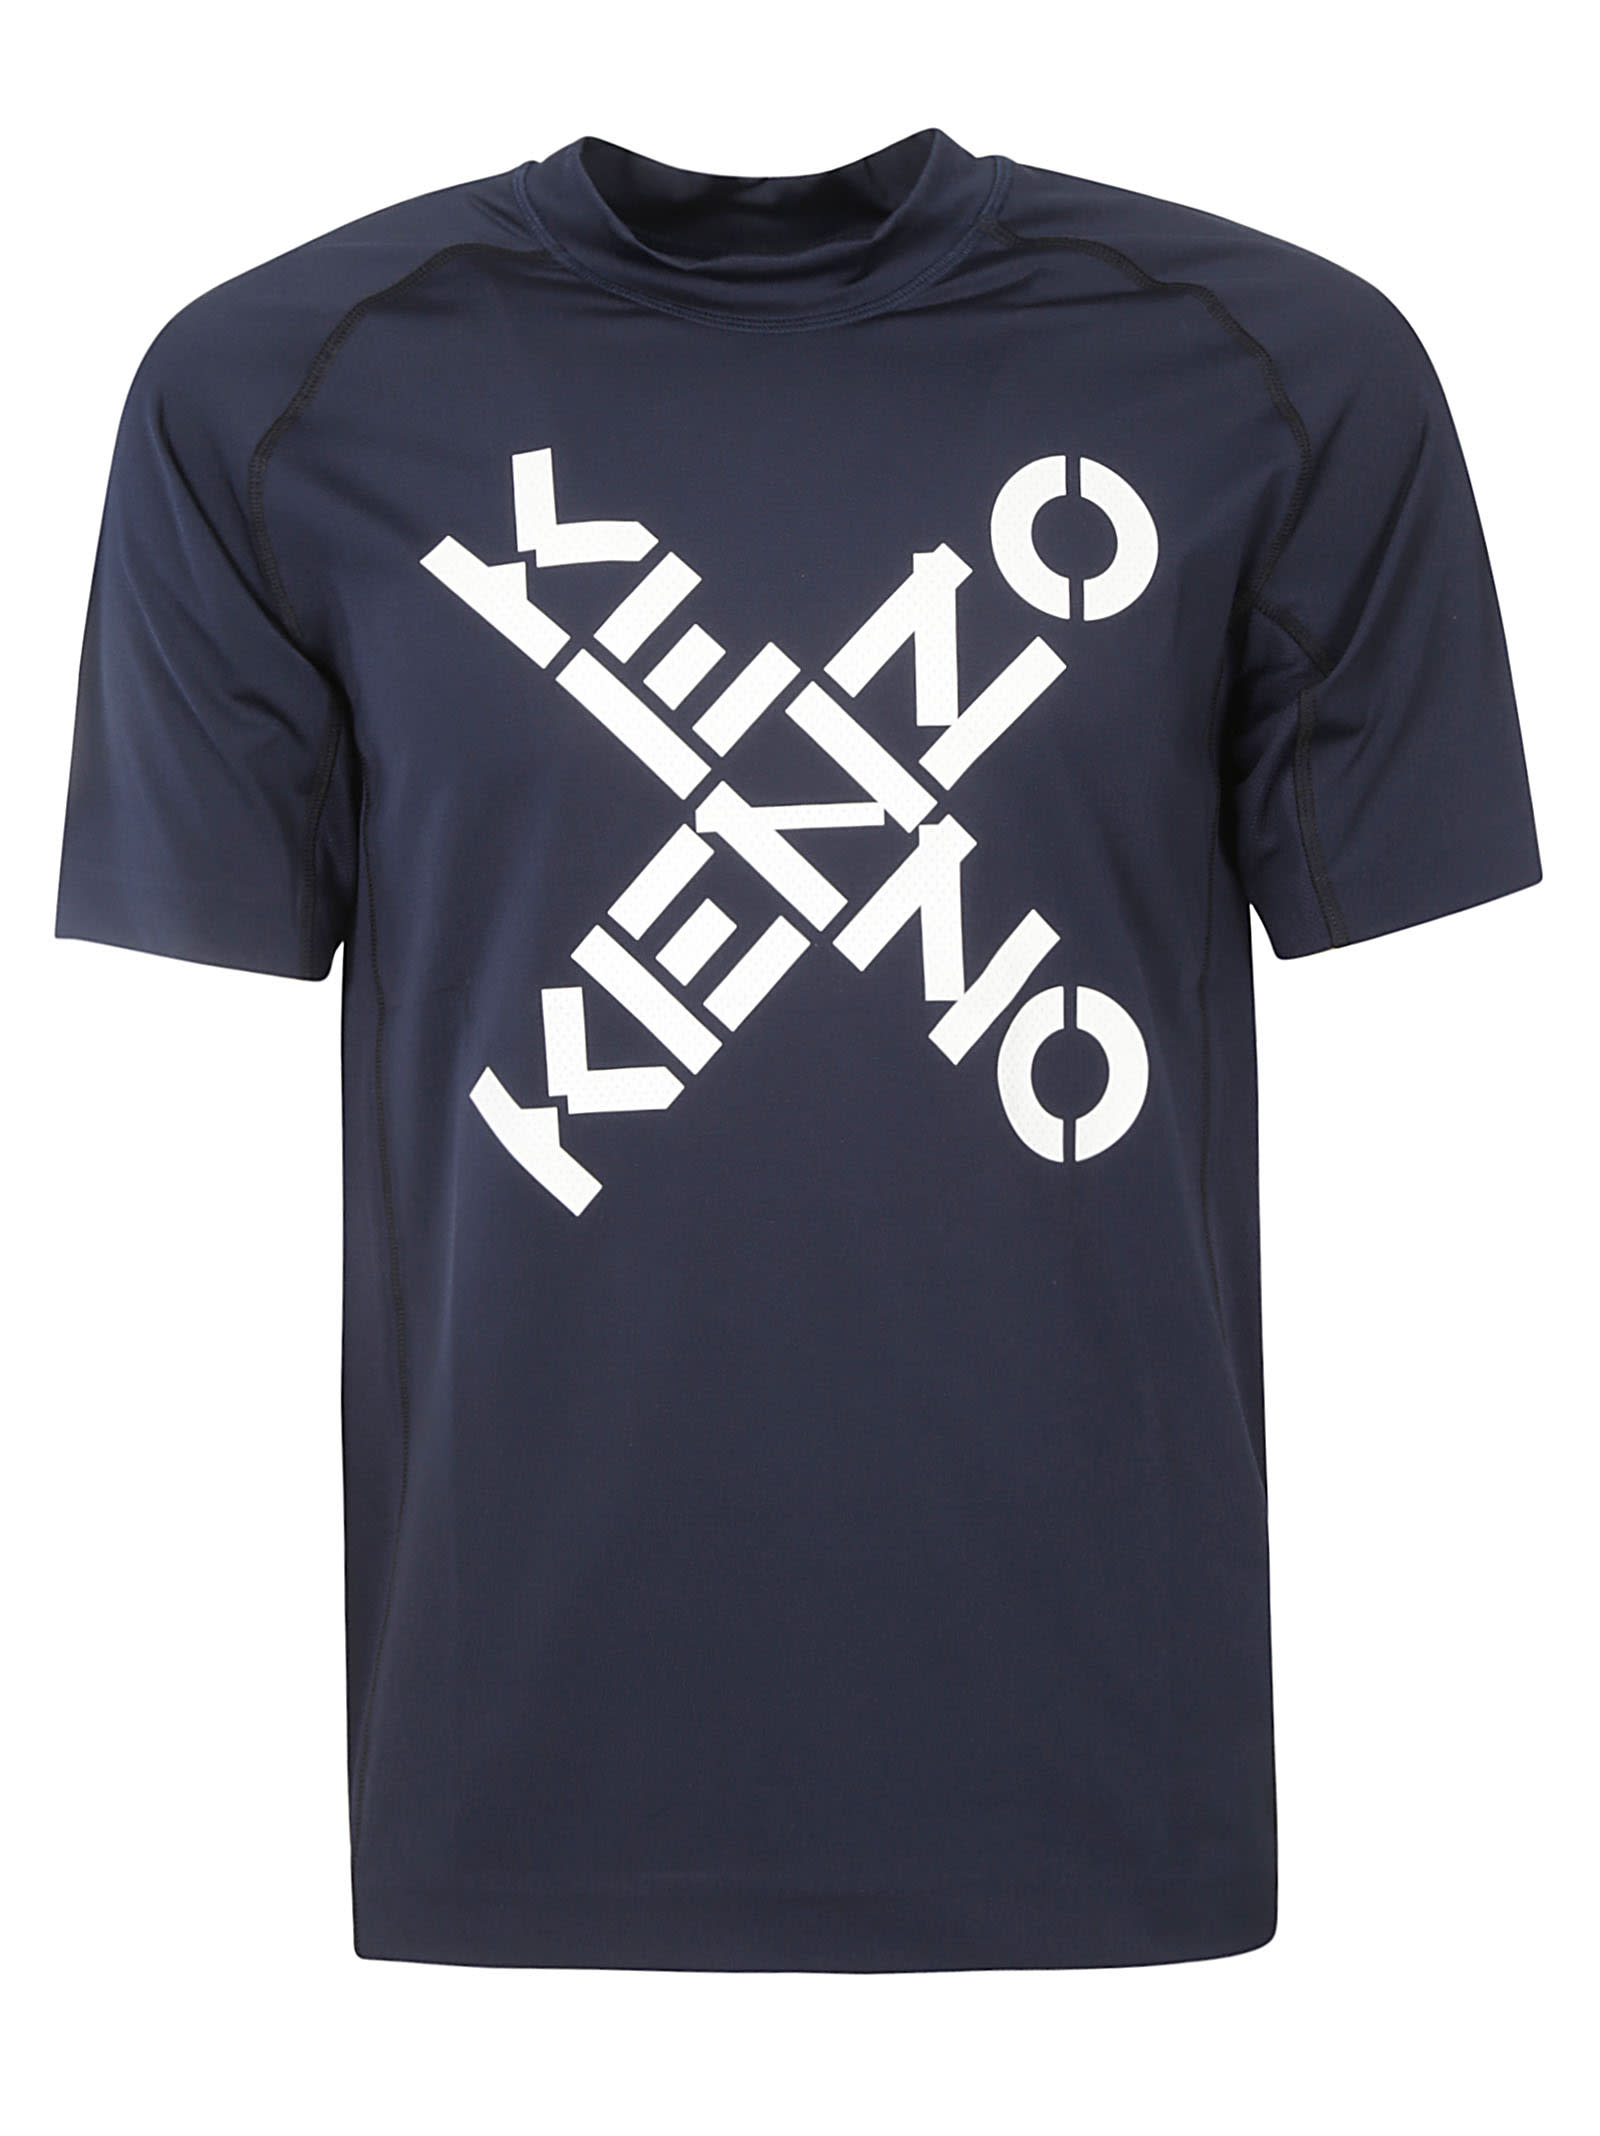 KENZO CROSS LOGO SLIM FIT T-SHIRT,FB55TS023 4JS77